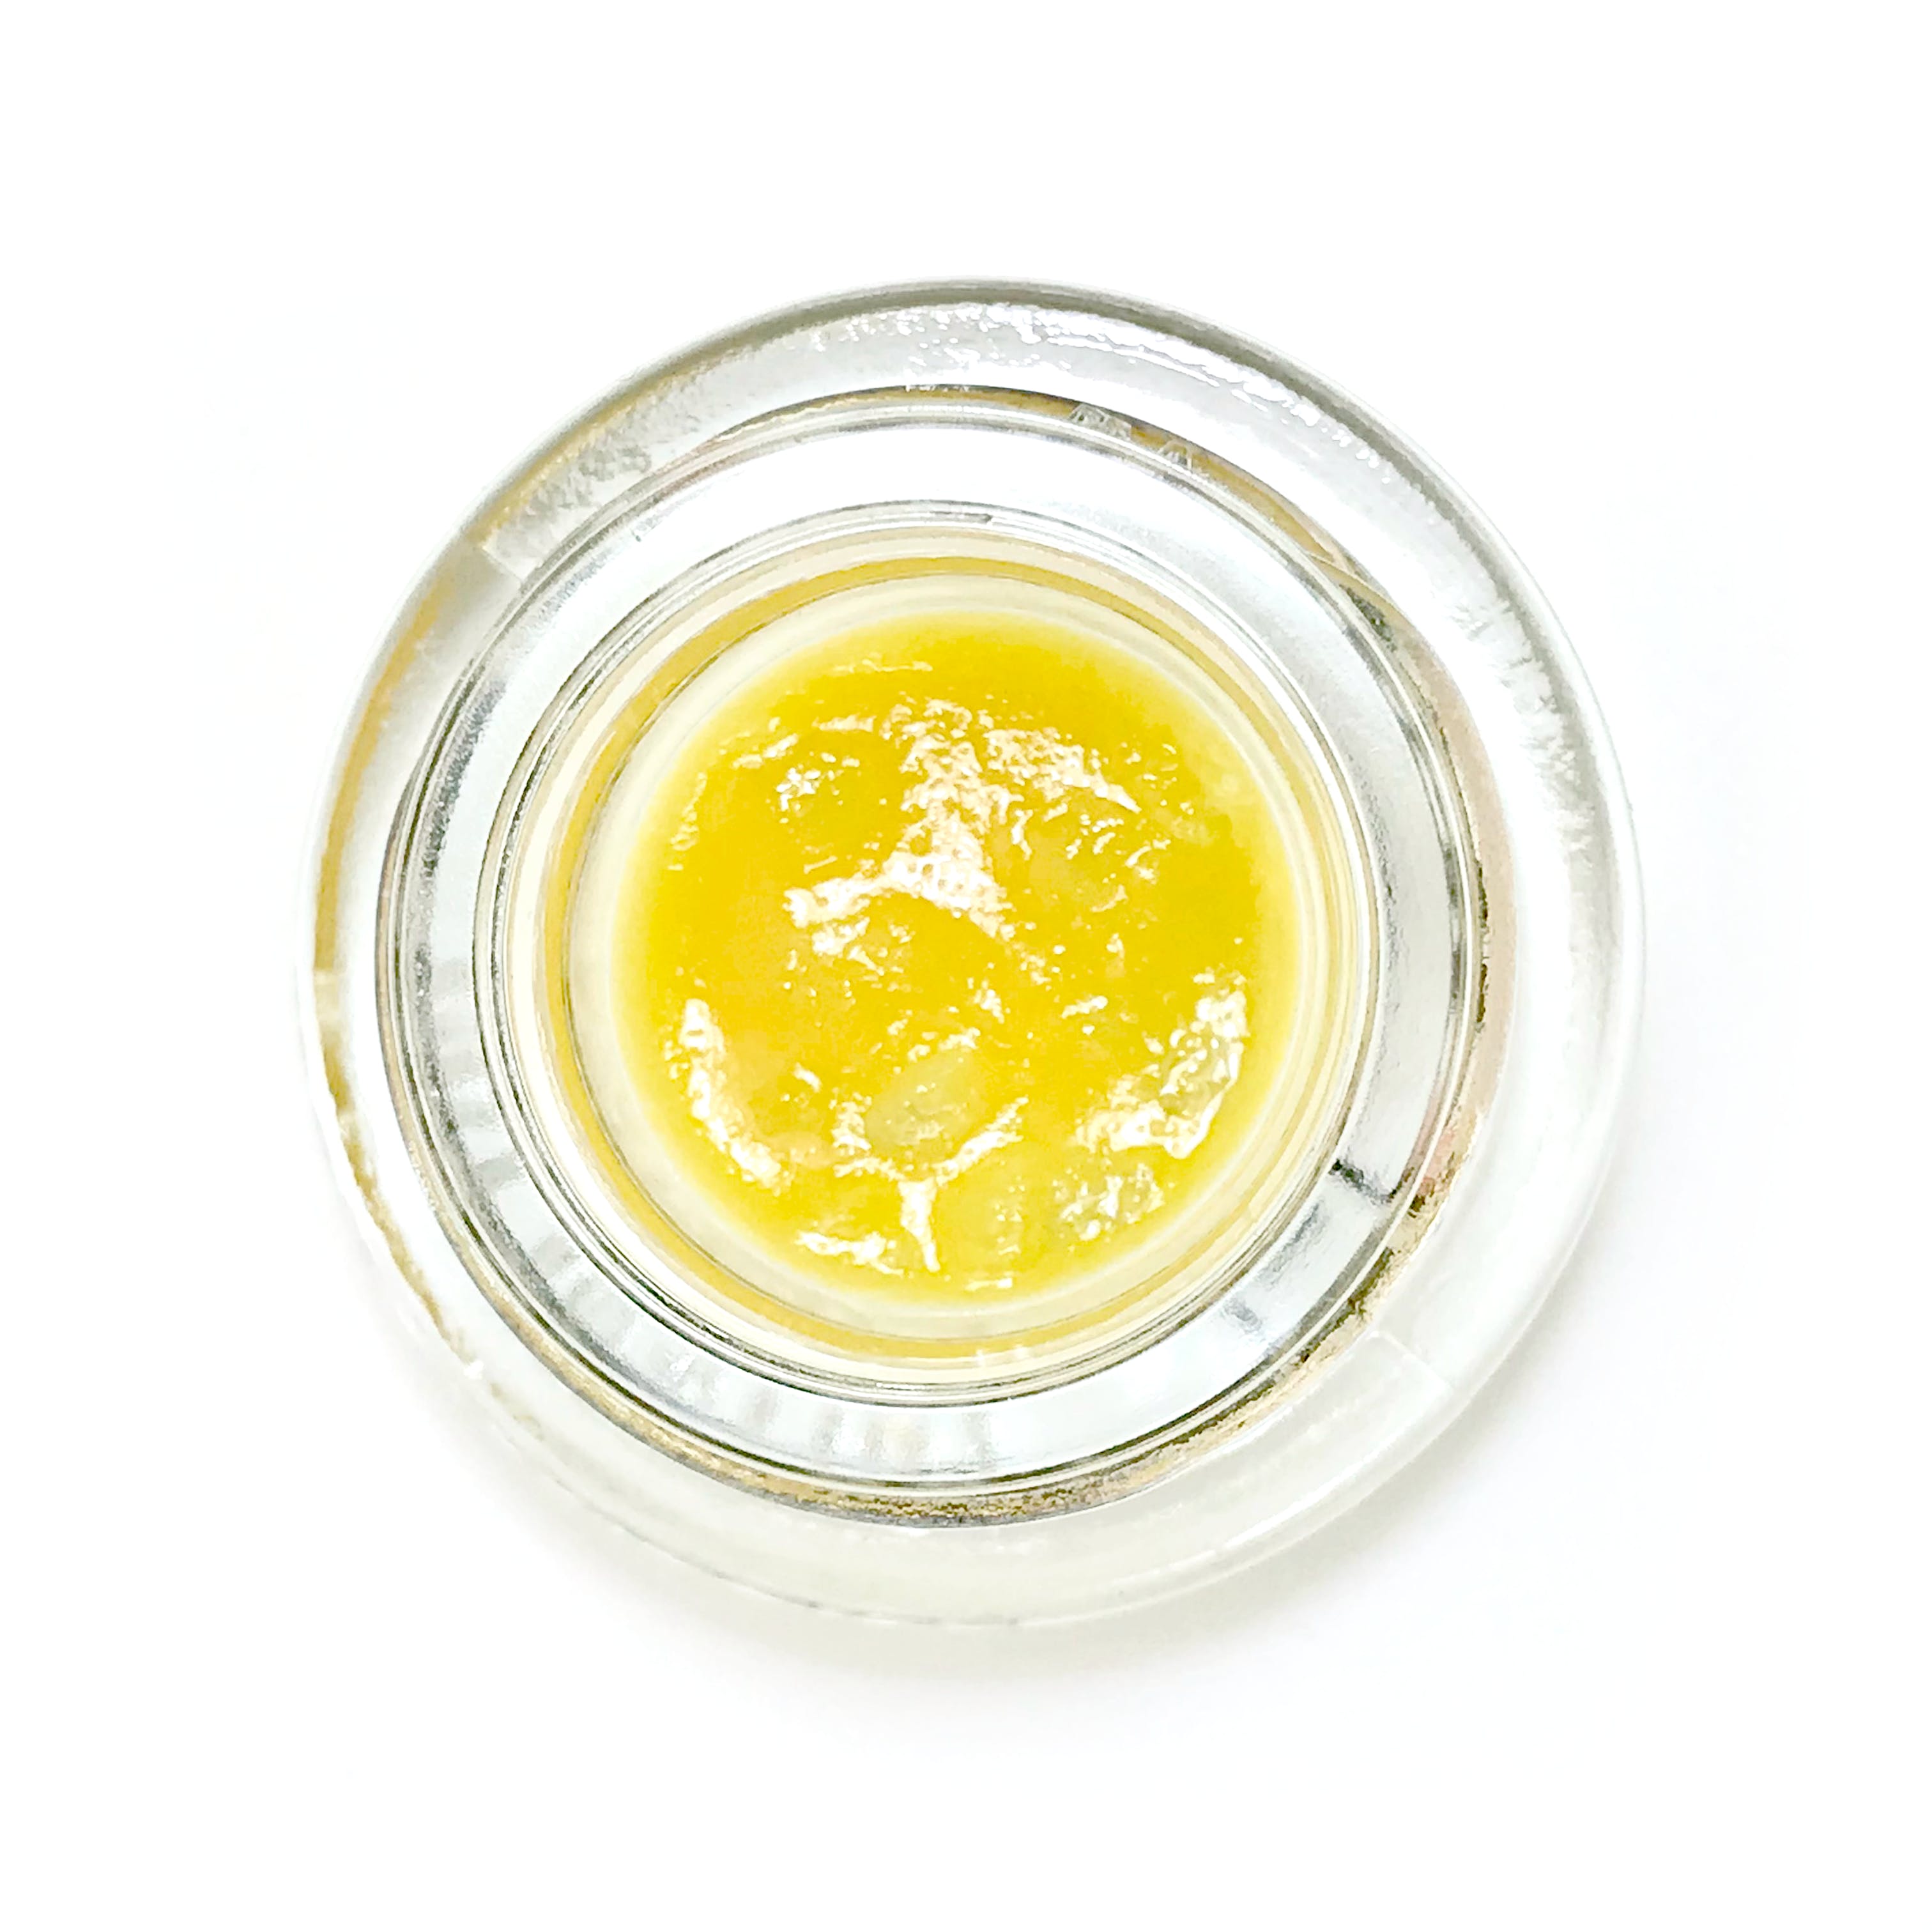 marijuana-dispensaries-organic-solutions-whittier-in-whittier-golden-strawberry-live-resin-sauce